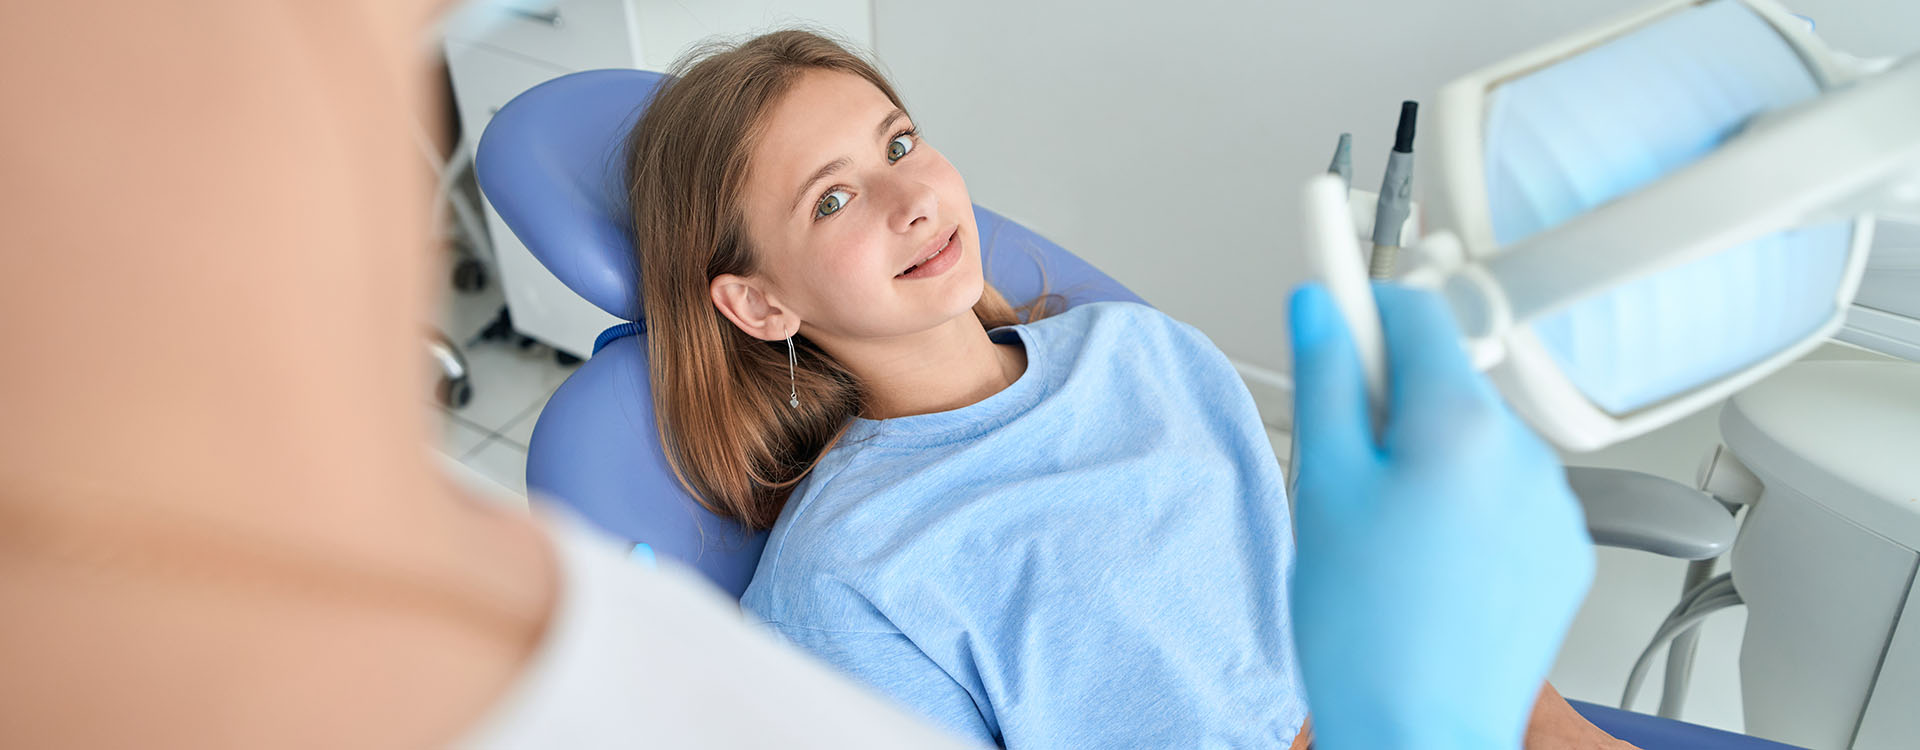 Clínica Dental Andrea Compte, tu Centro Odontológico especializado. Odontopediatría en Traiguera. Adolescente escuchando al dentista pediátrico durante la consulta.